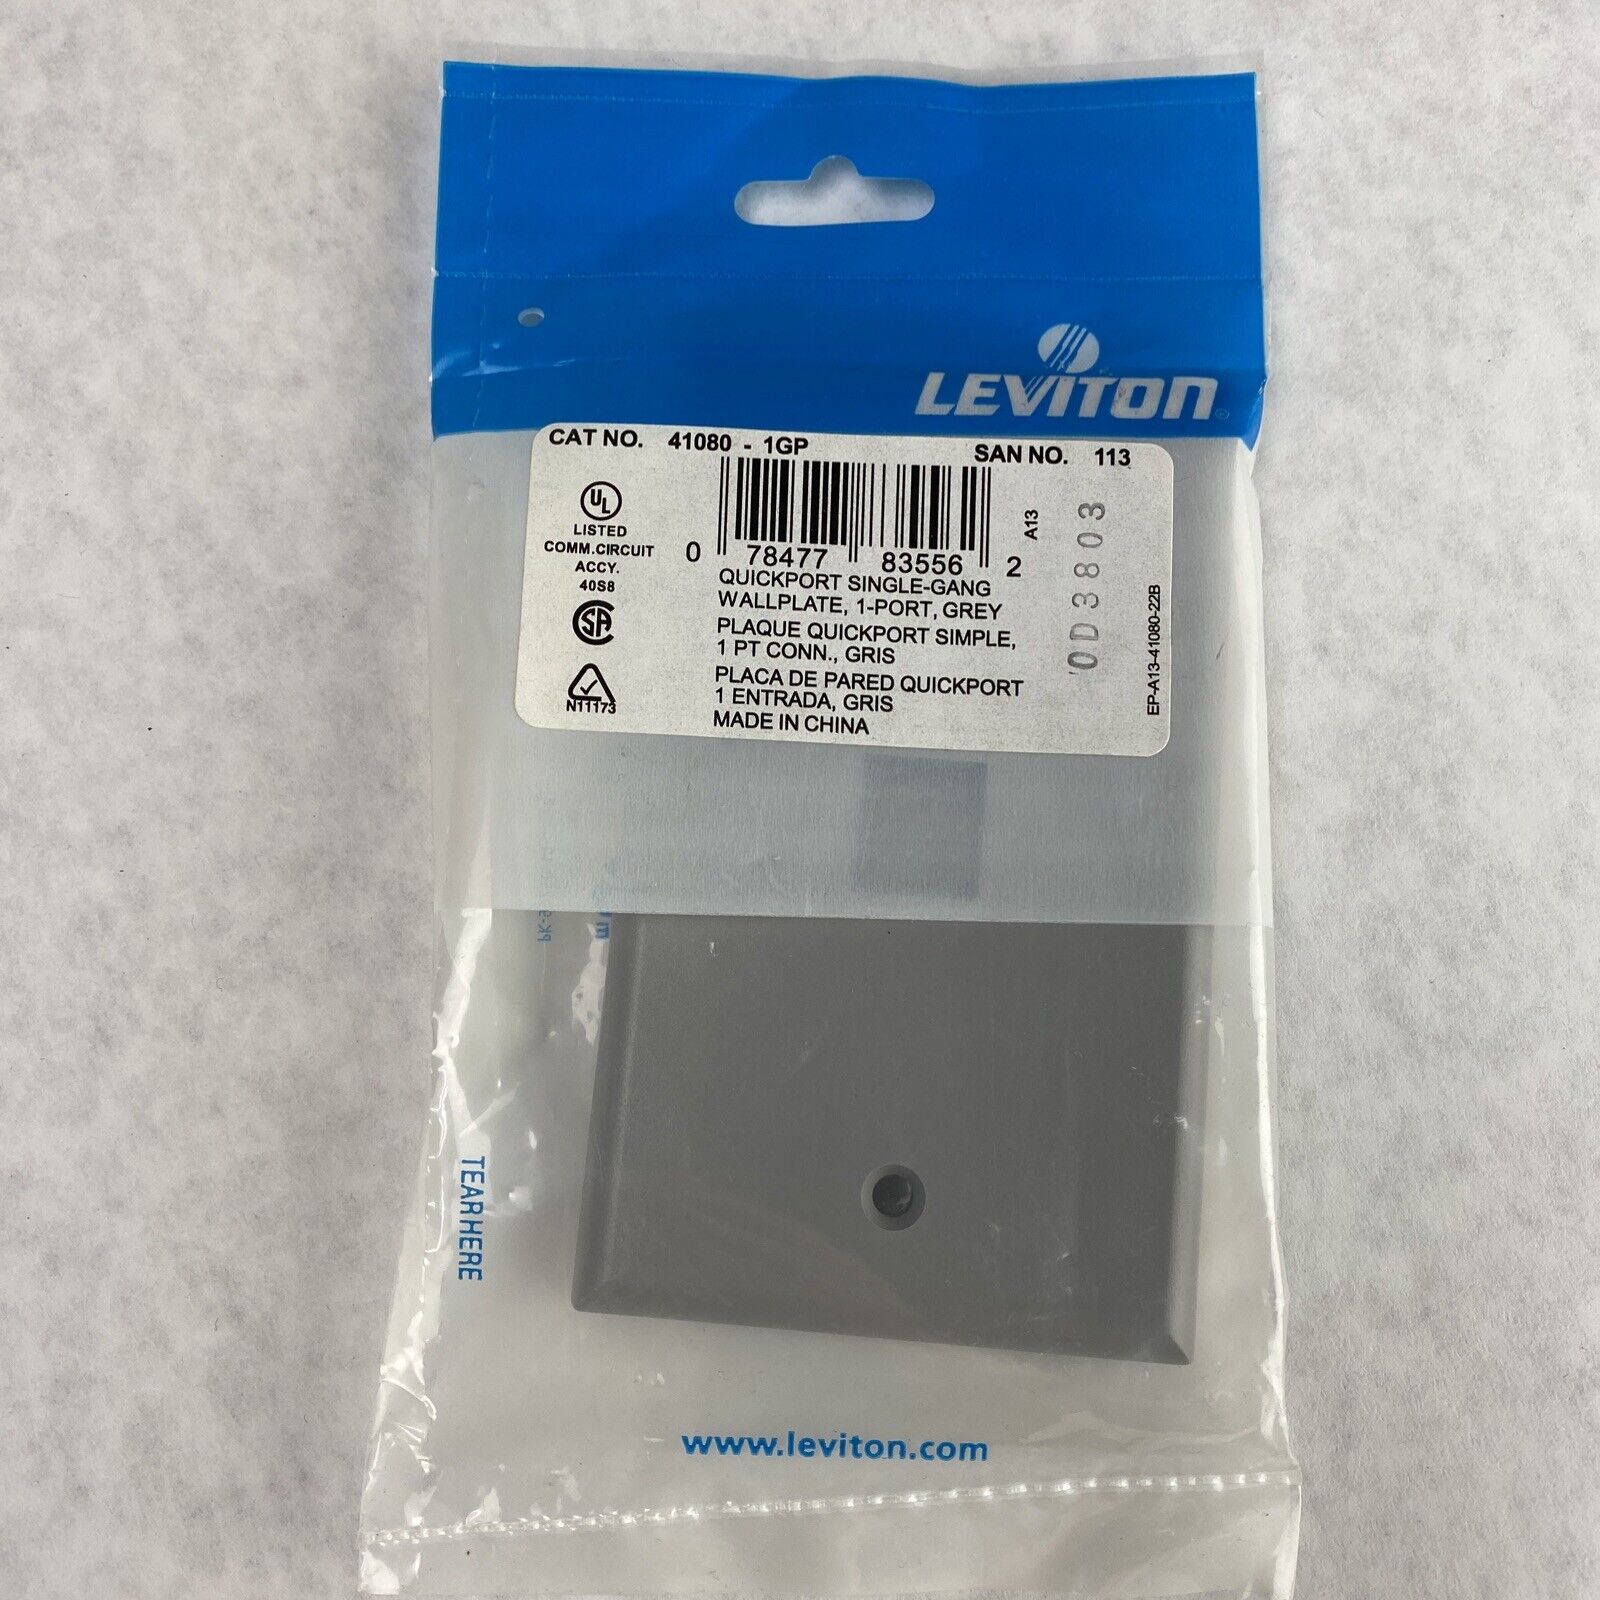 Lot( 10 ) Leviton 41080-1GP Single-Gang 1-Port QuickPort Wallplate Grey